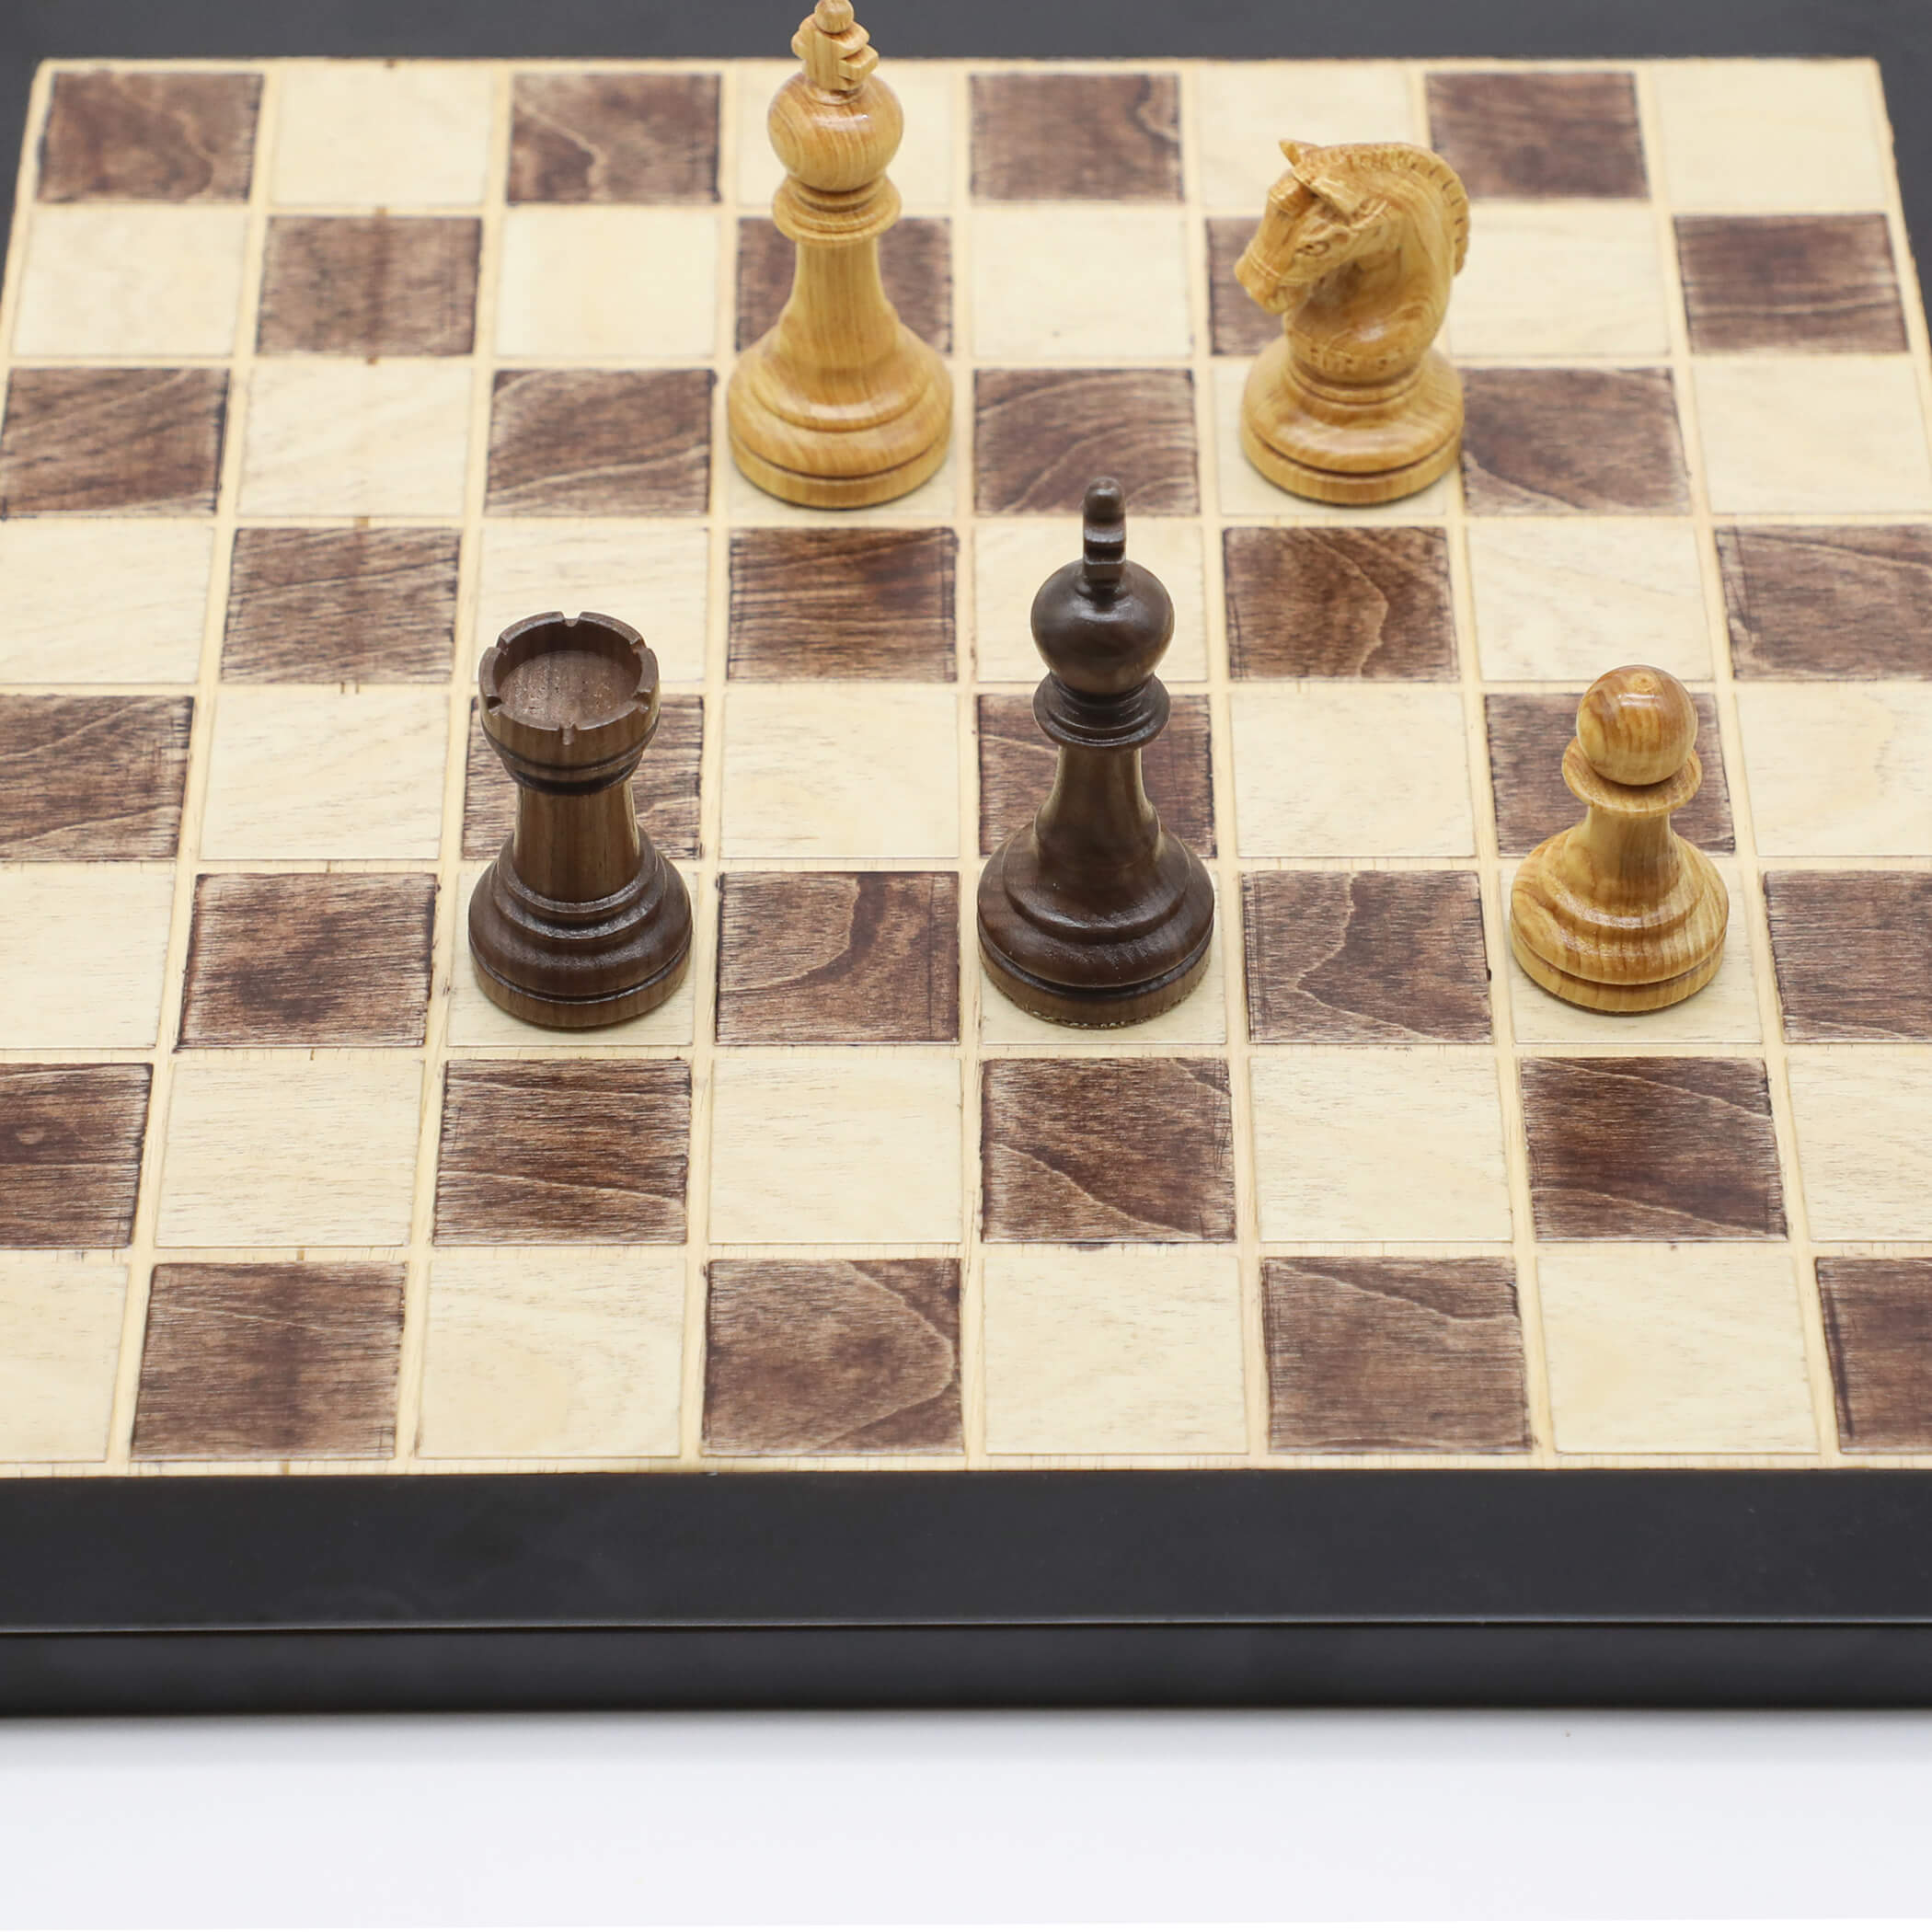 Standard Wooden Chess Board